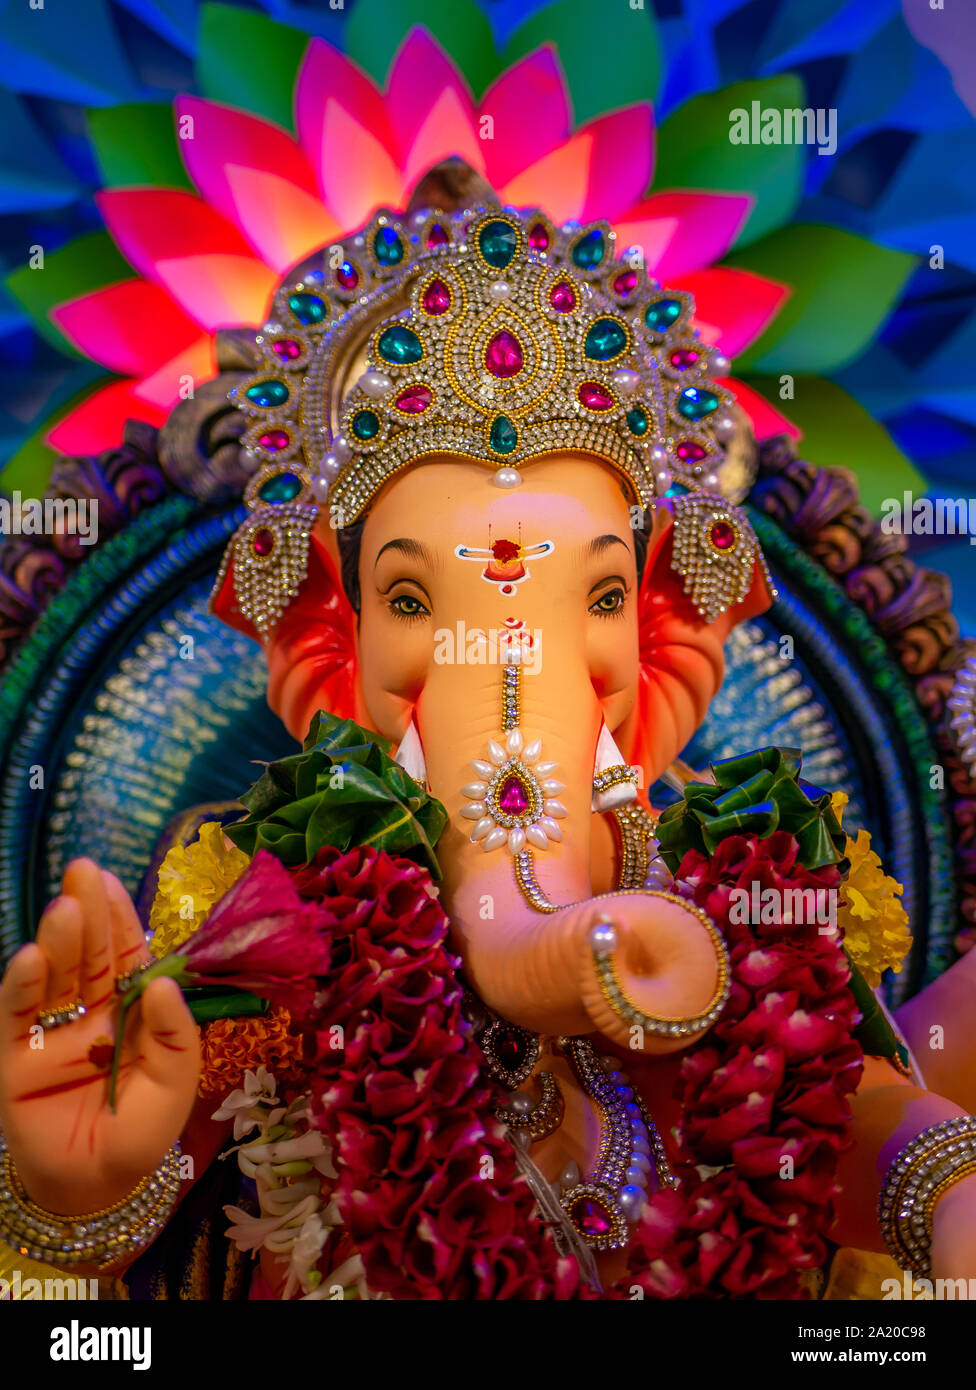 Collection of 999+ Beautiful Ganpati Images - Stunning Full 4K Display ...